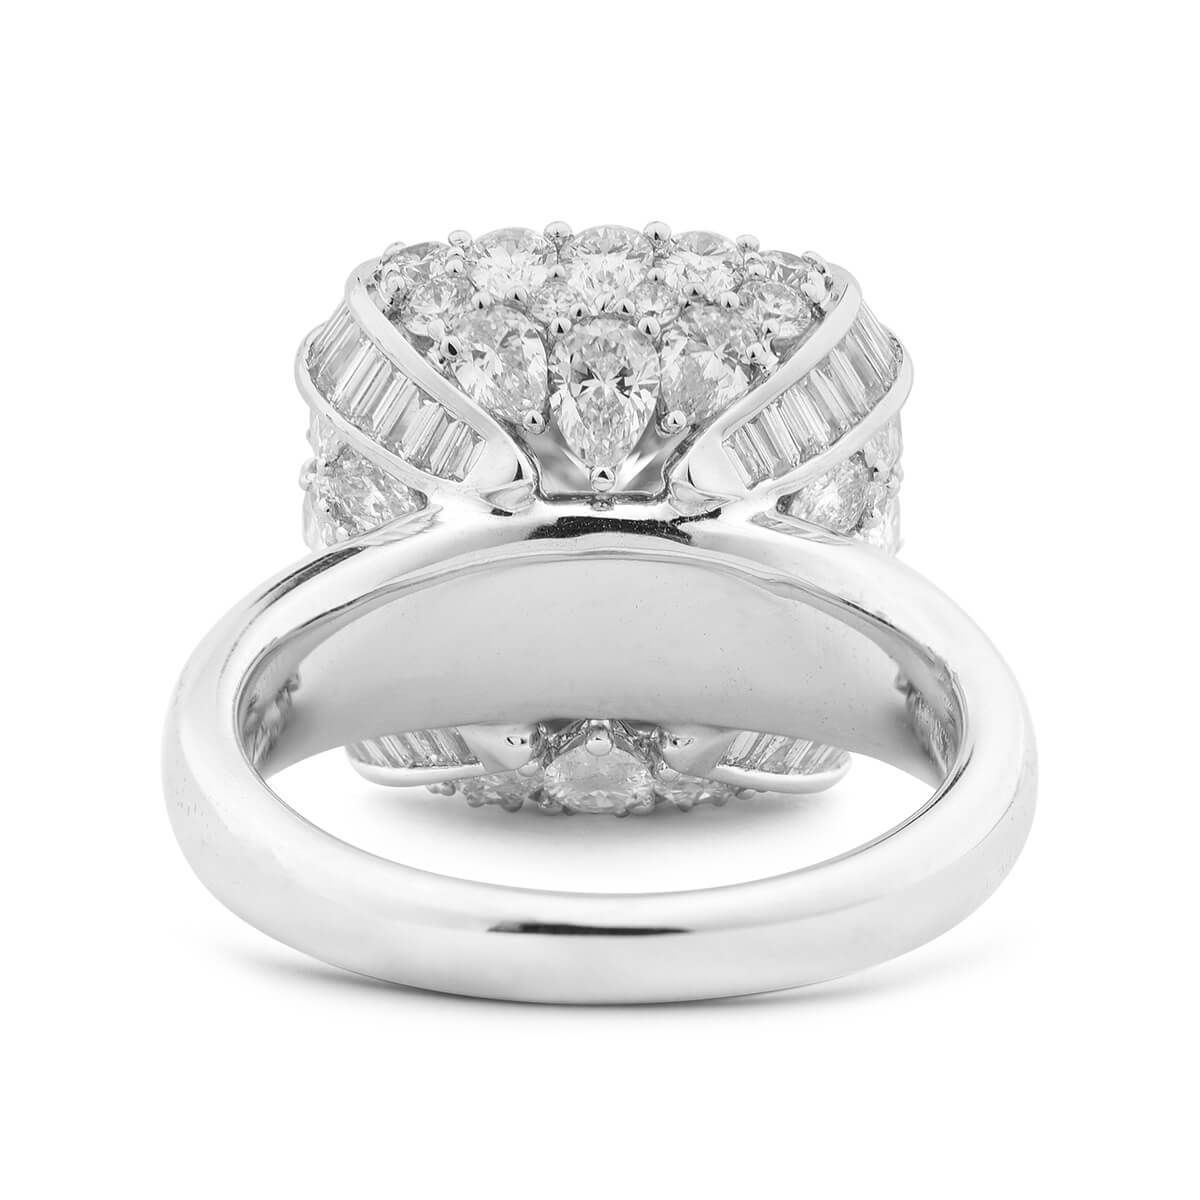  White Diamond Ring, 7.69 Ct. TW, Cushion shape, GIA Certified, 5181342216